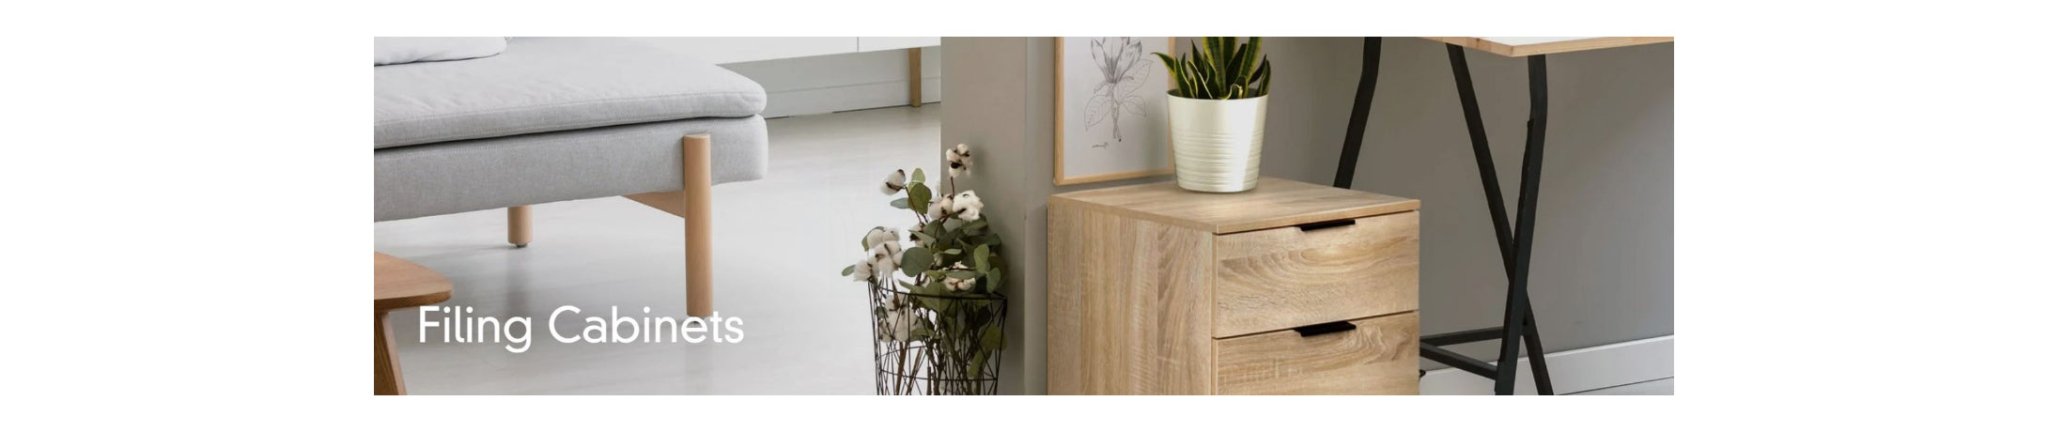 Filing Cabinets - Newstart Furniture